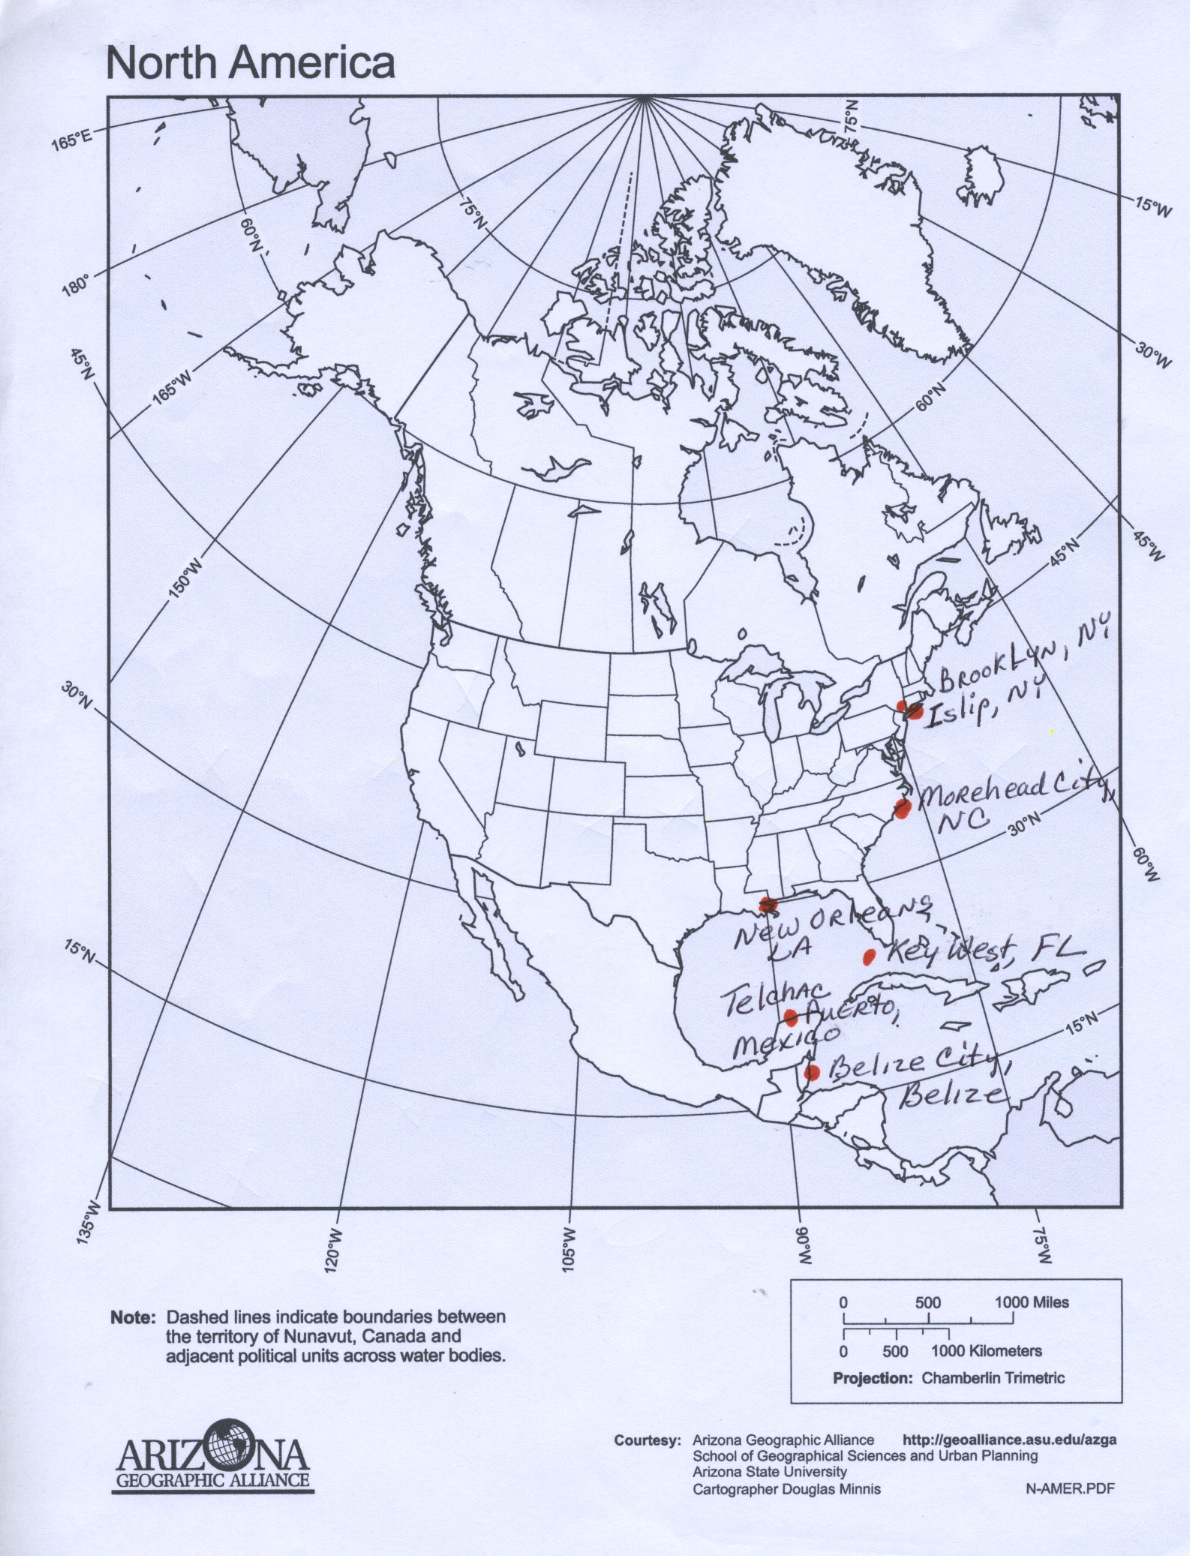 arizona-geographic-alliance-maps-map-of-new-hampshire